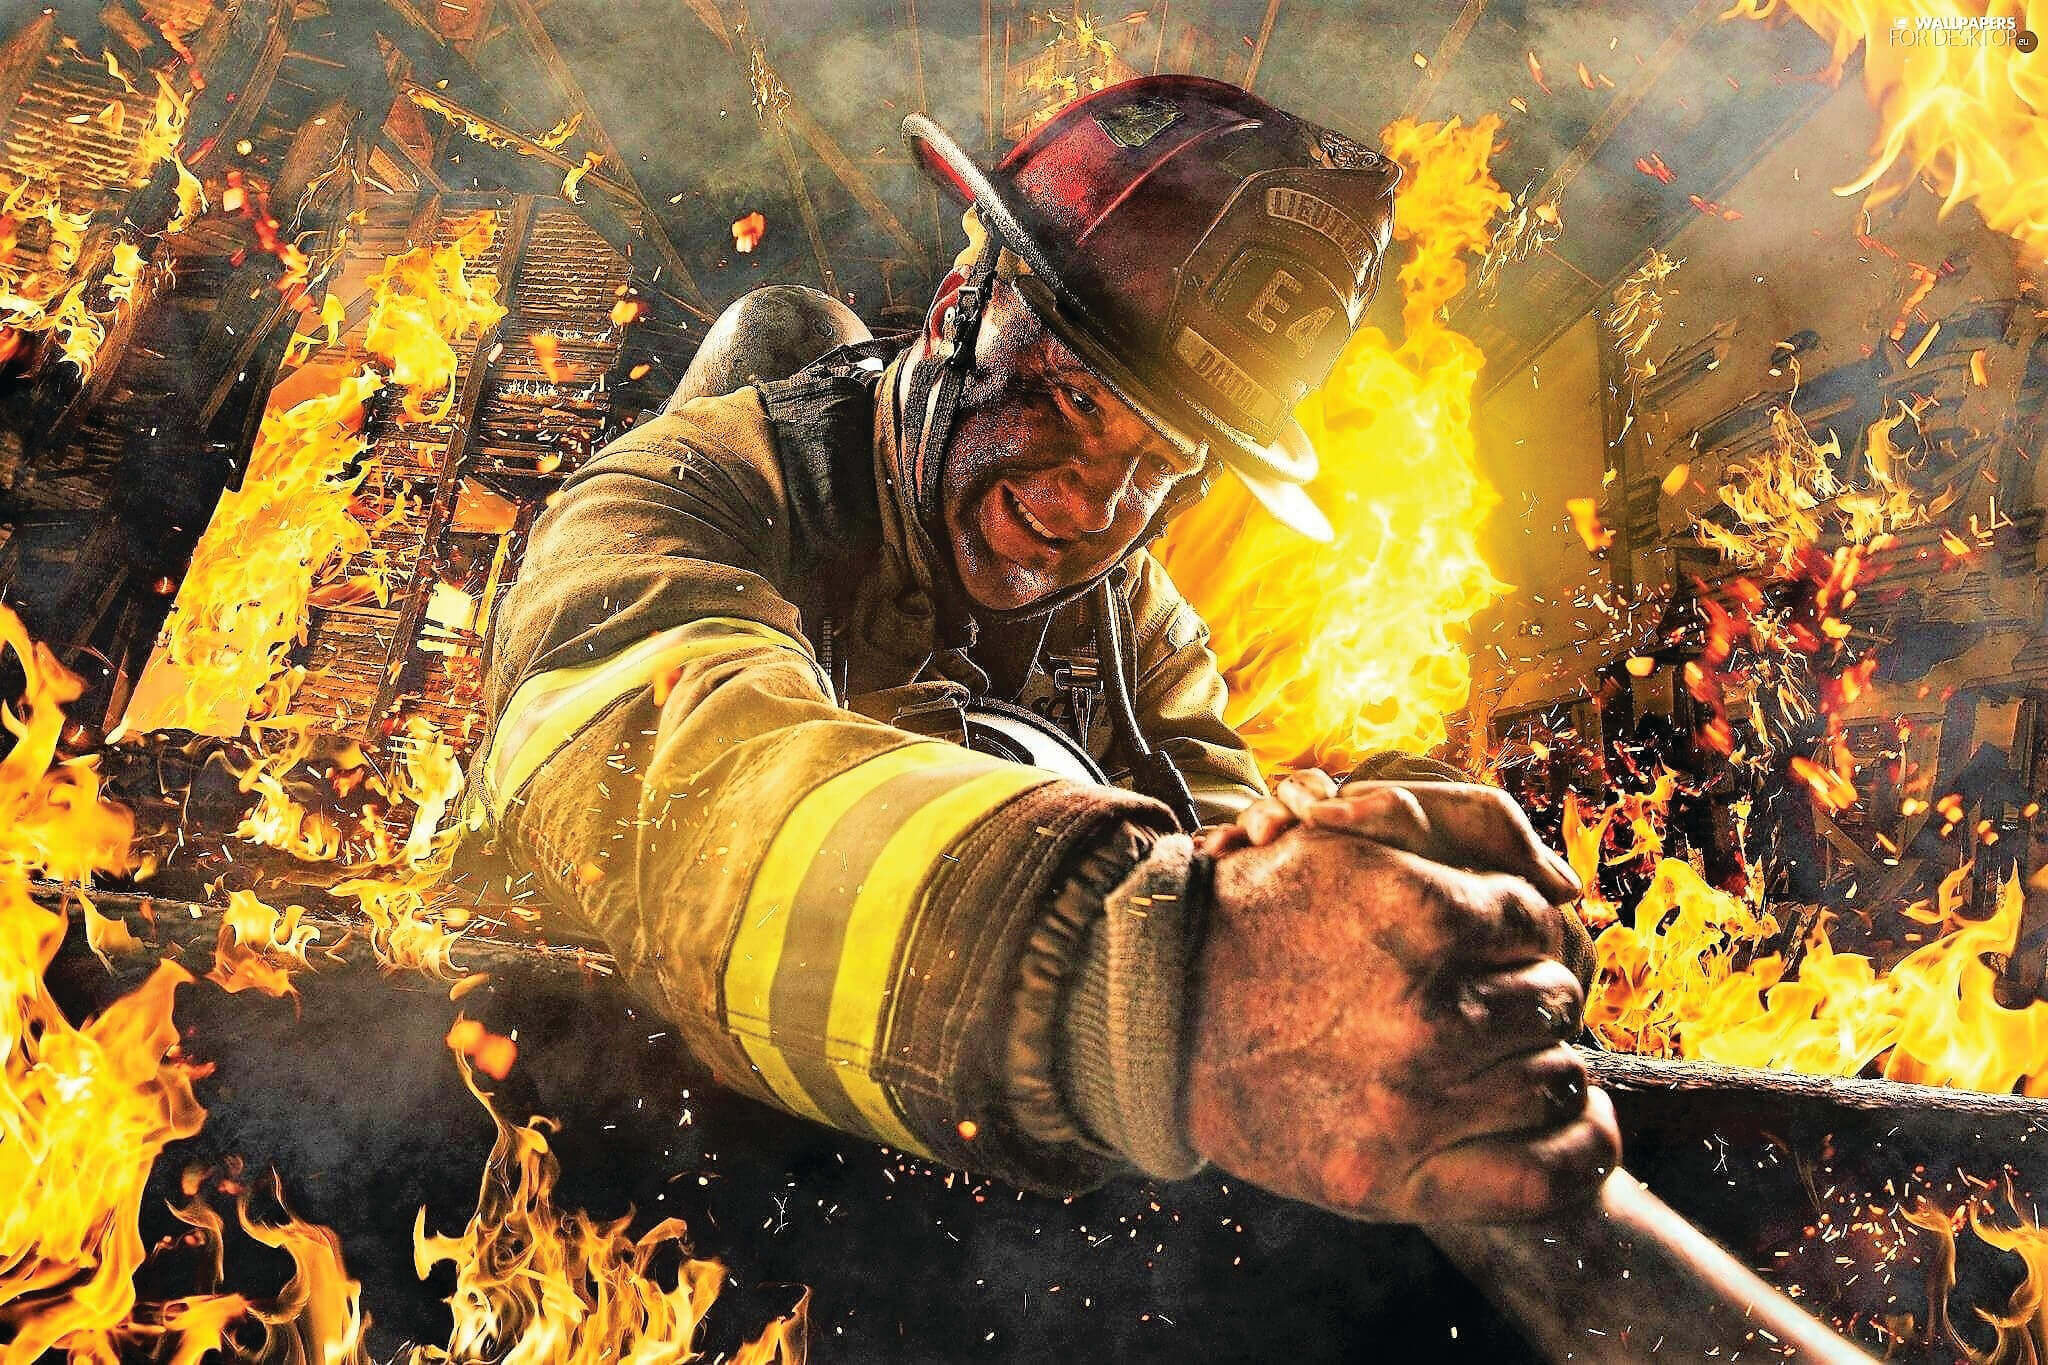 Fondos de pantalla de bomberos - FondosMil